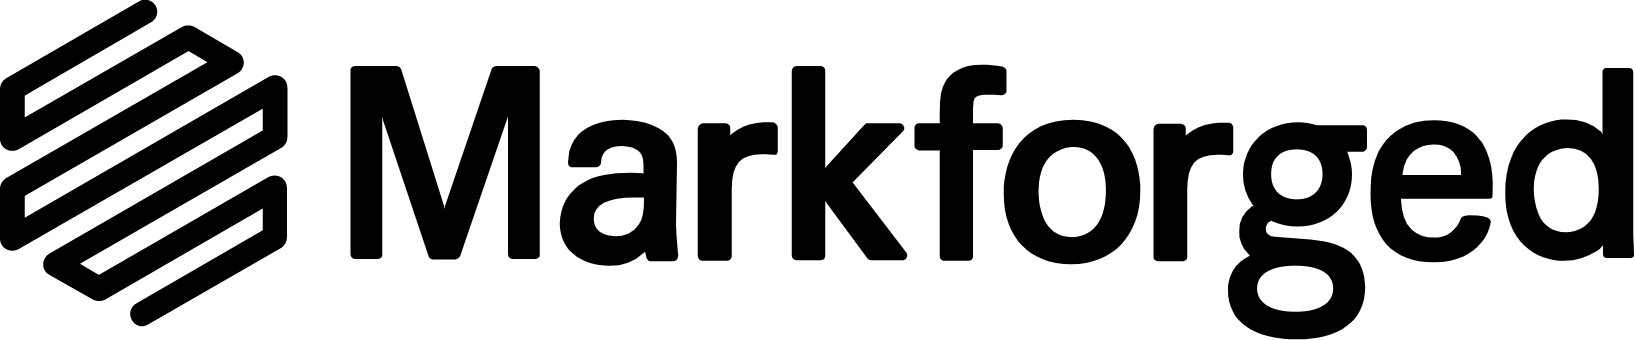 Markforged logo large (transparent PNG)